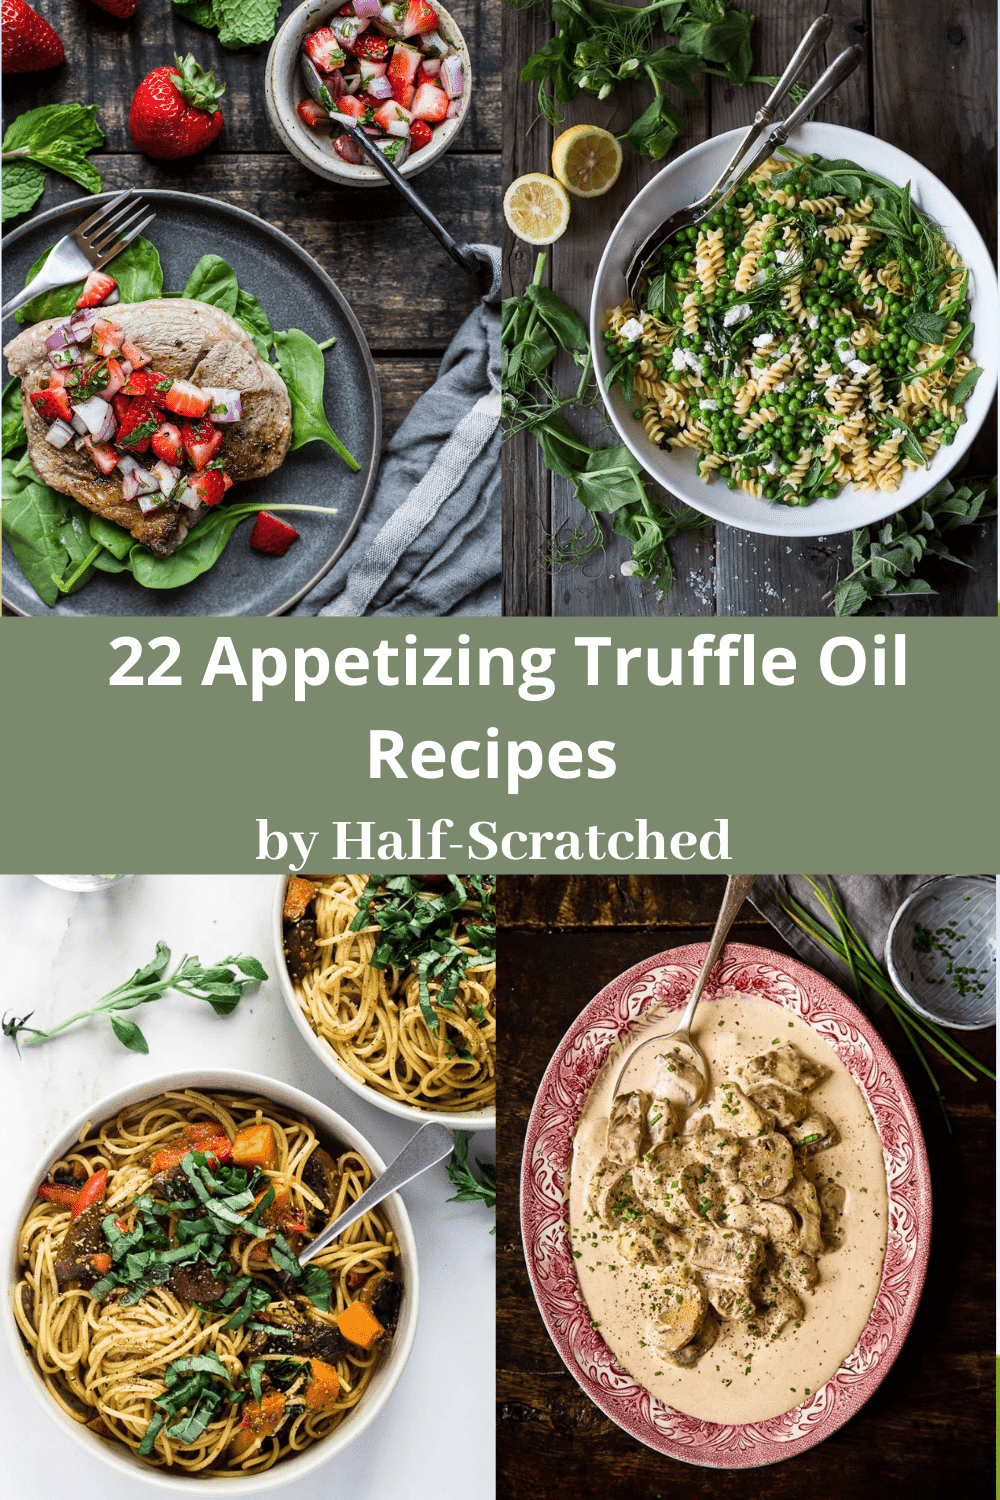 22 Appetizing Truffle Oil Recipes